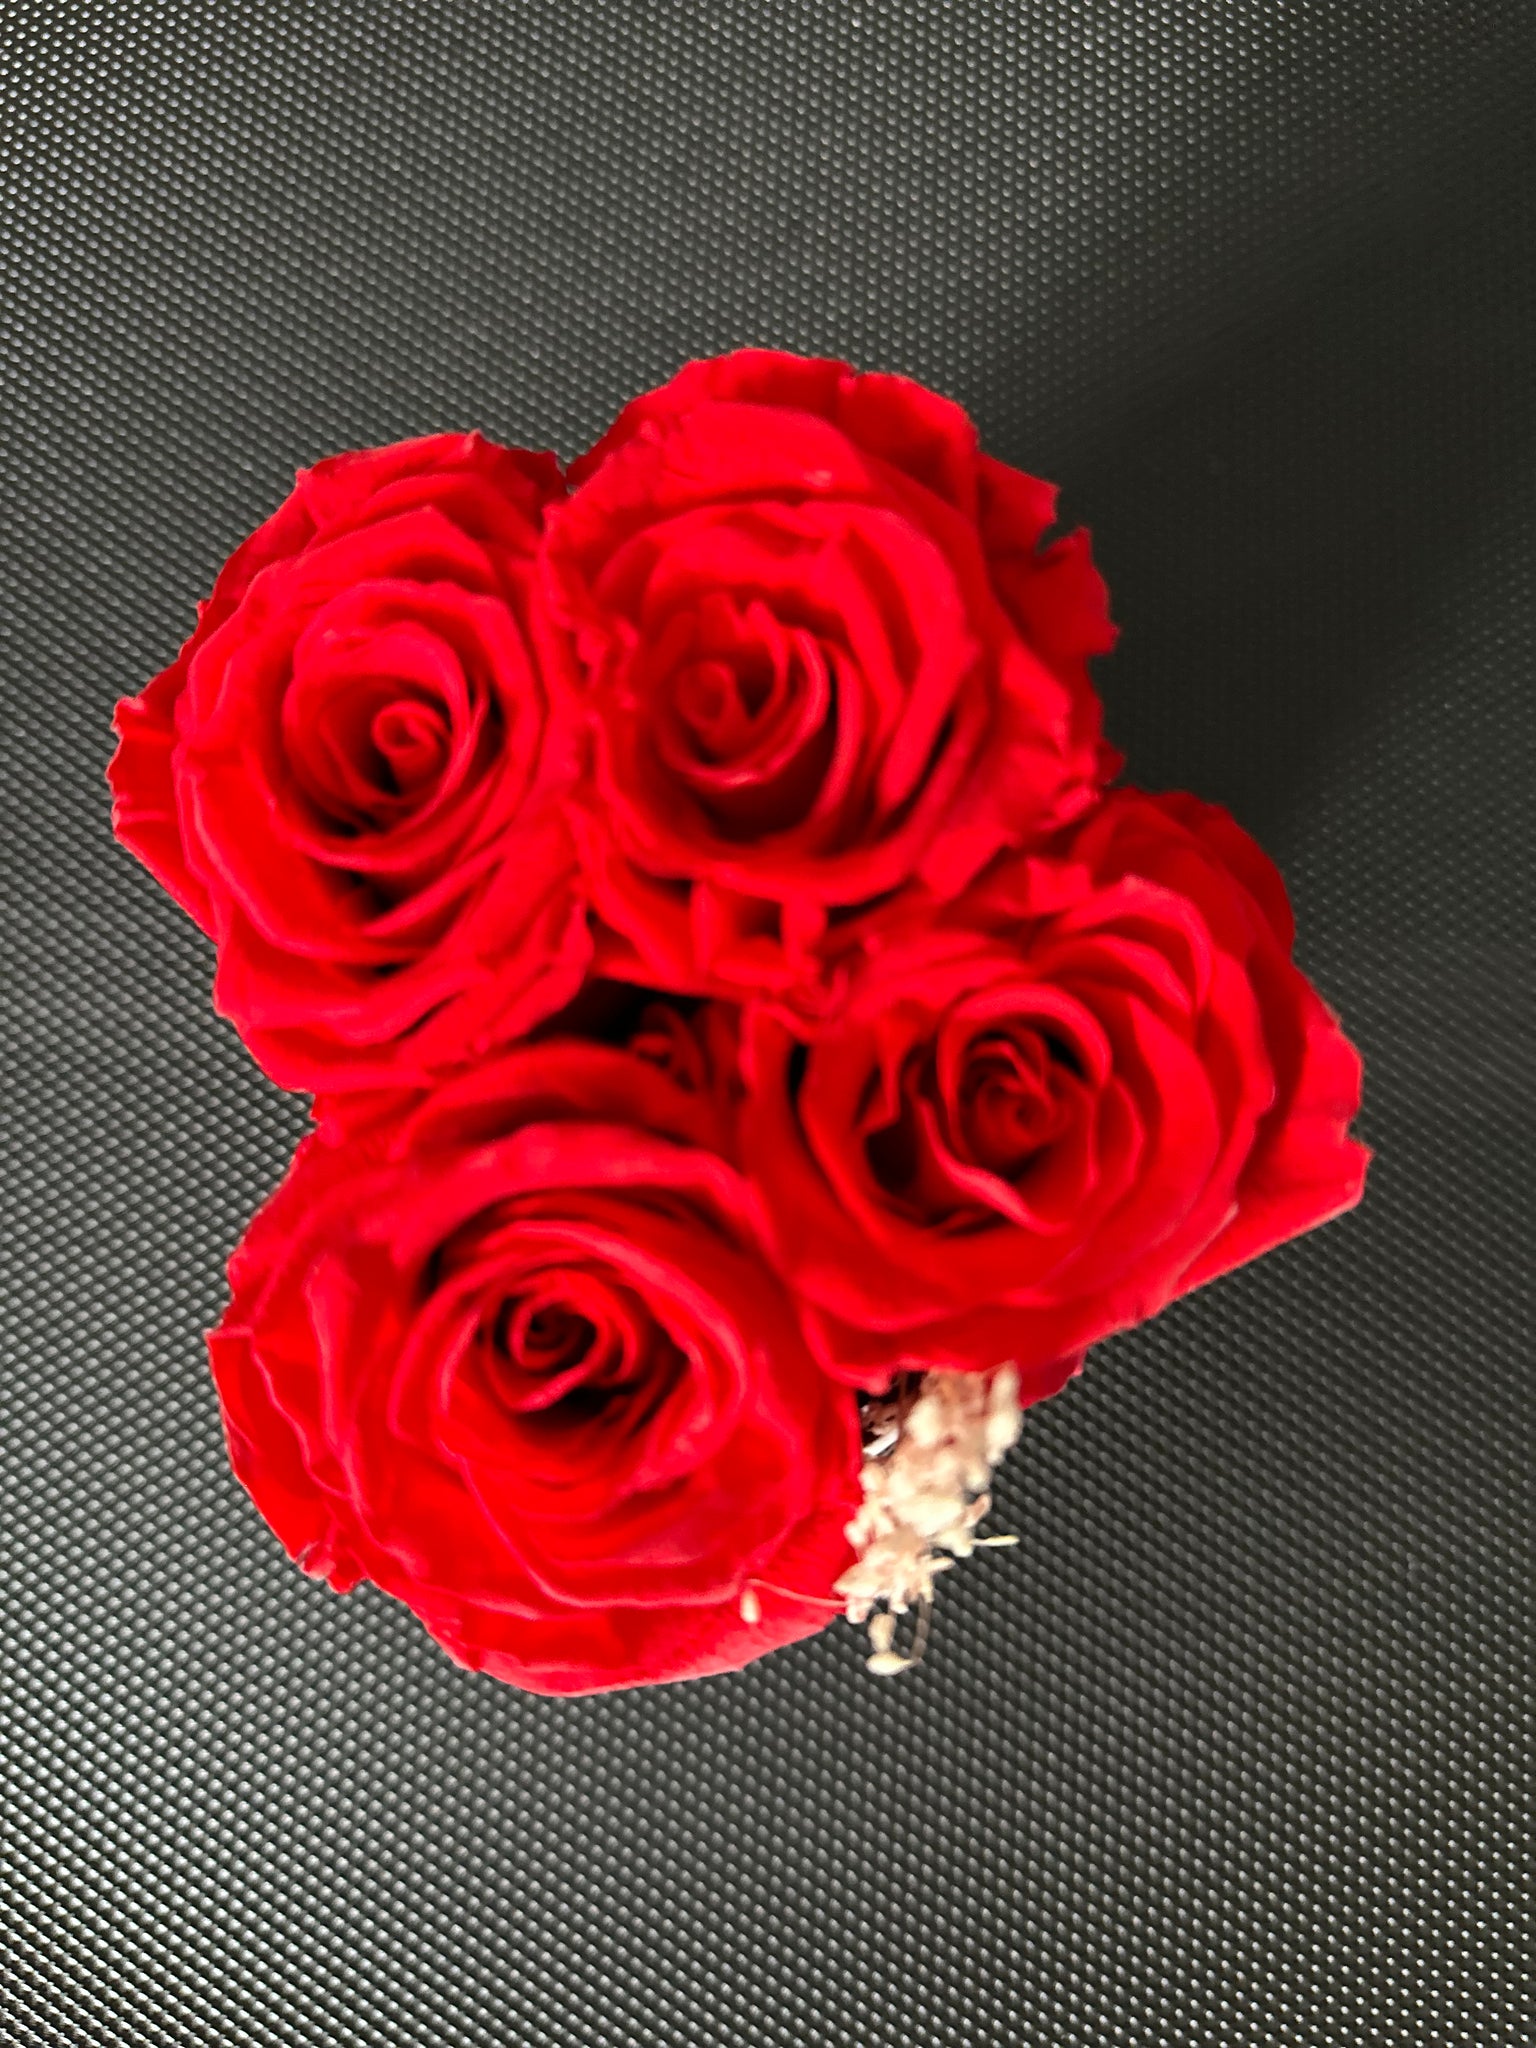 Heart shape / Romance Flower